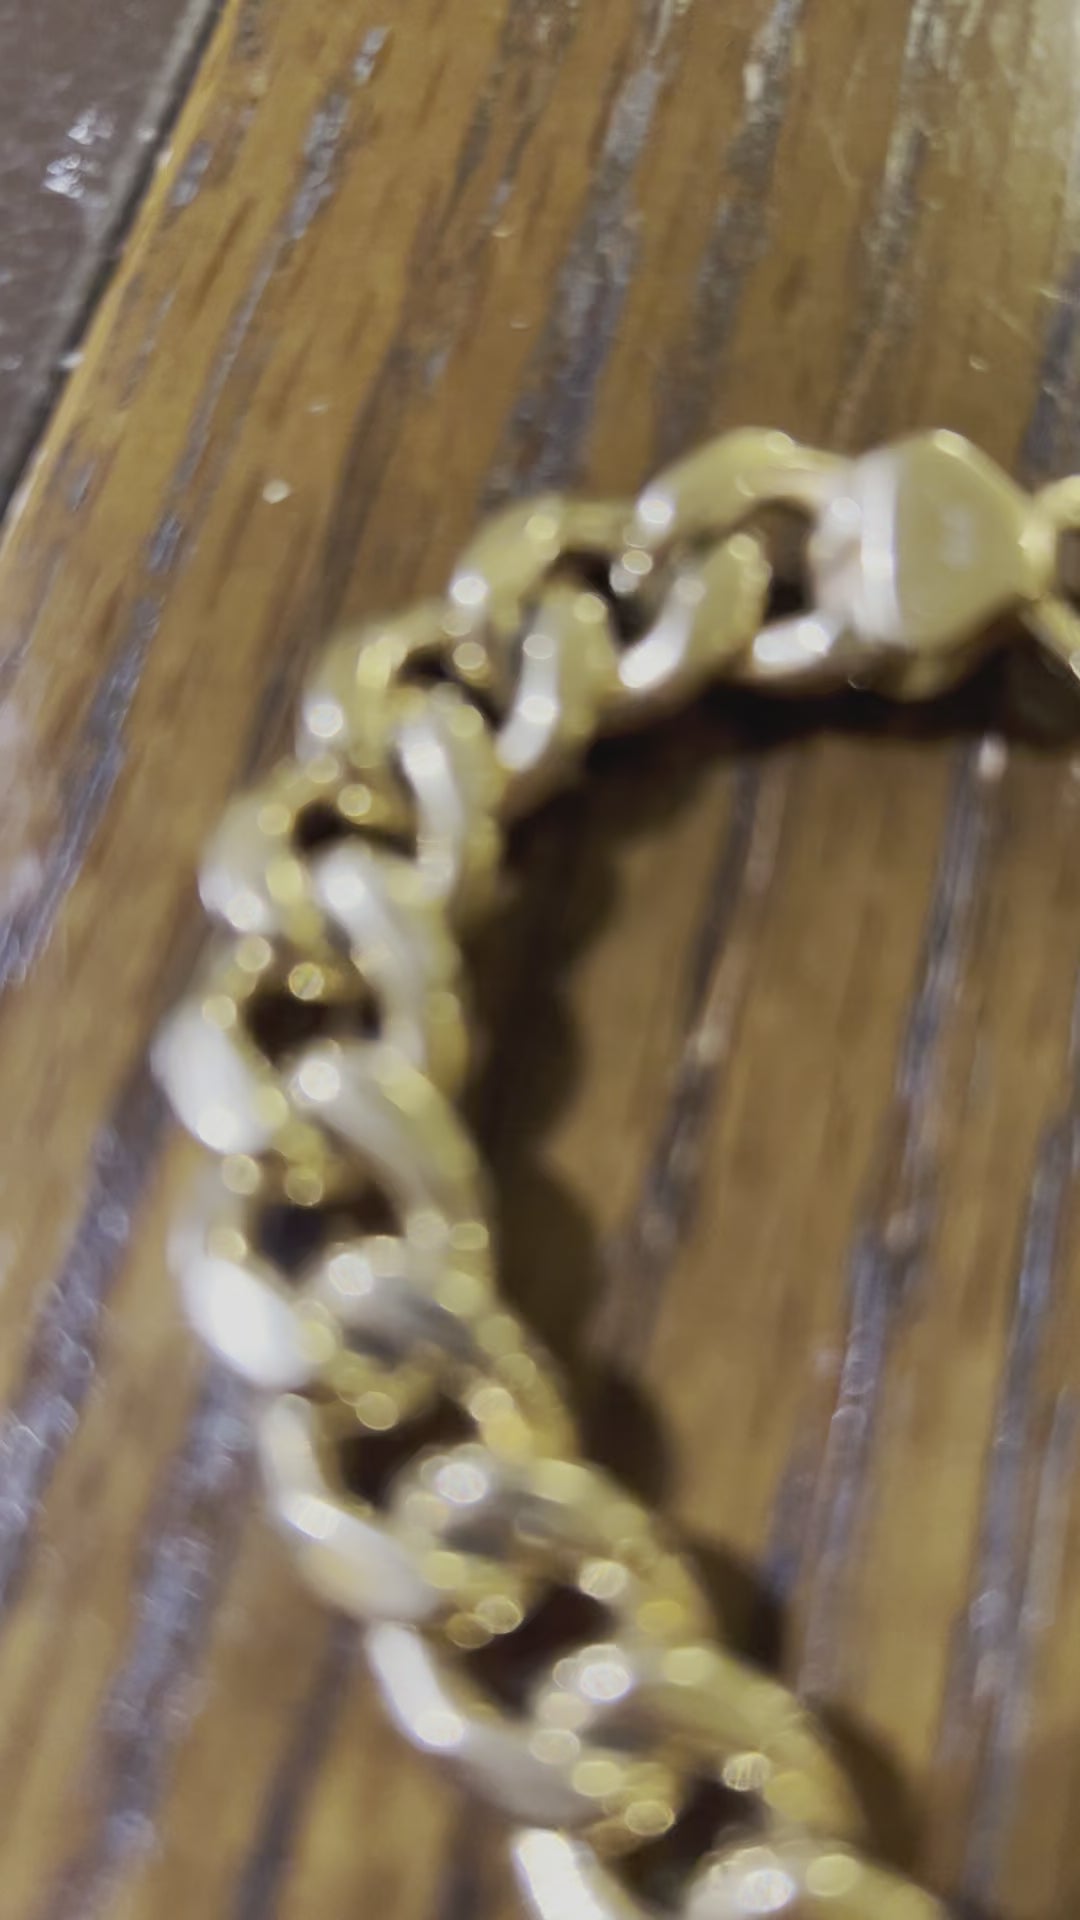 Large Cuban Link Gold Chain - Handmade